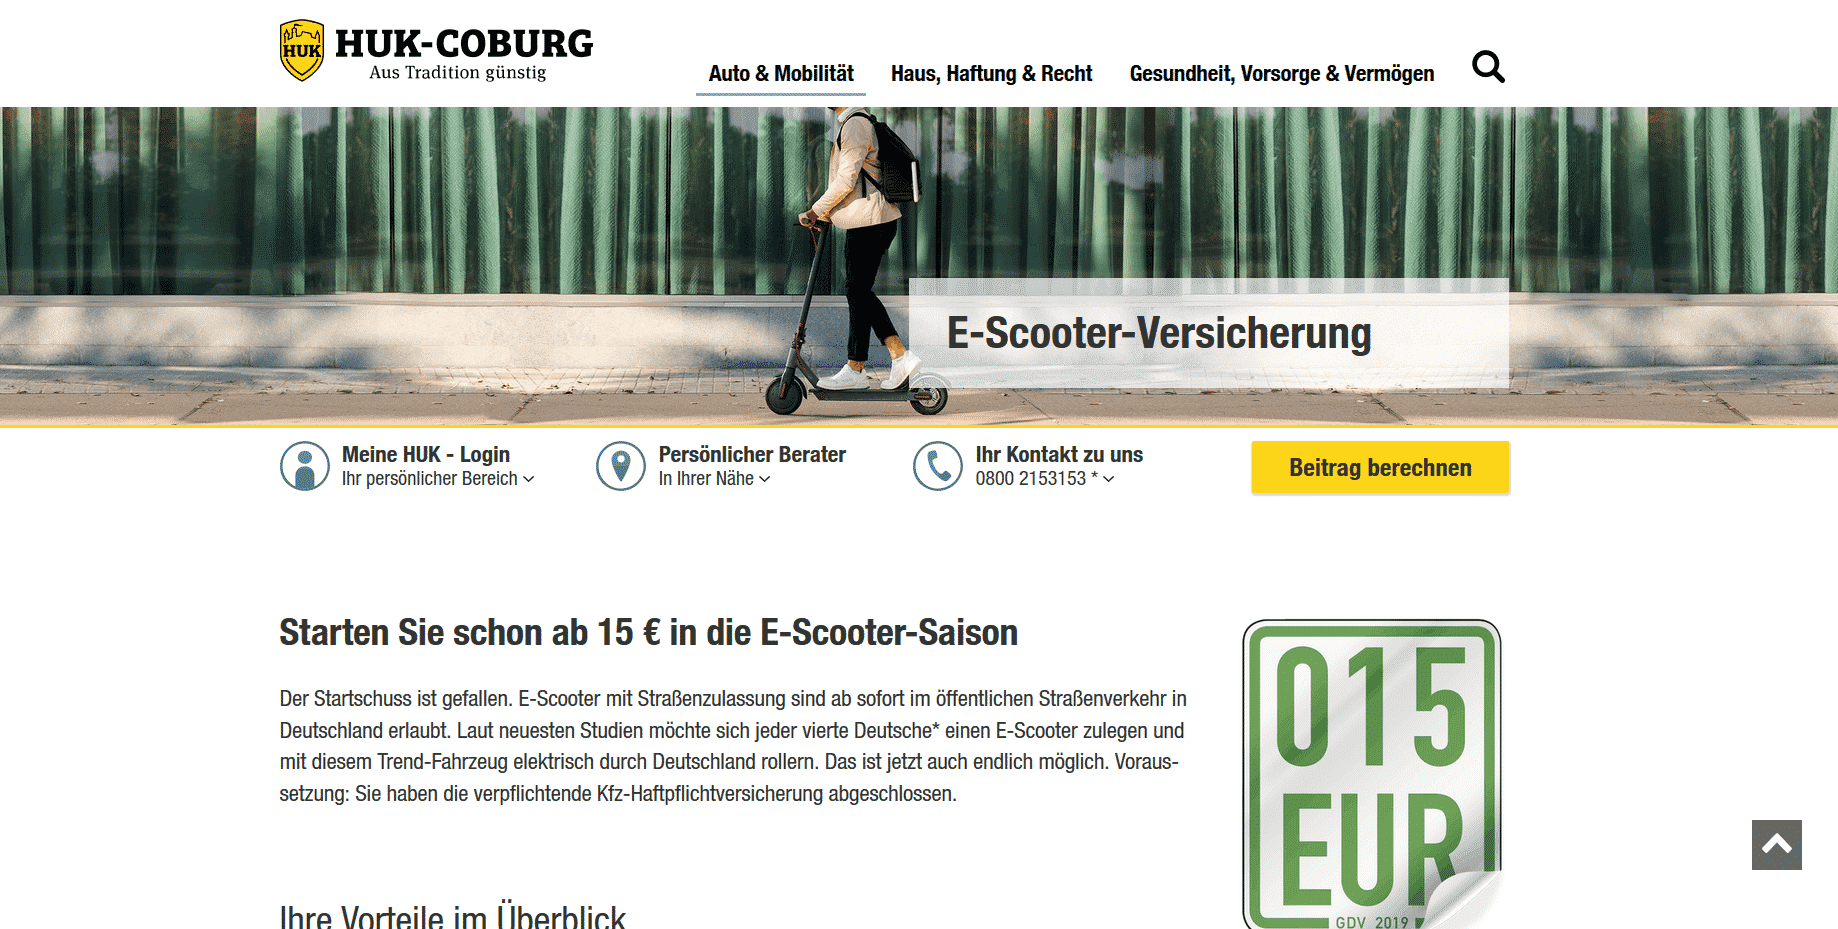 HUK-Coburg bietet E-Scooter - eScooter Szene